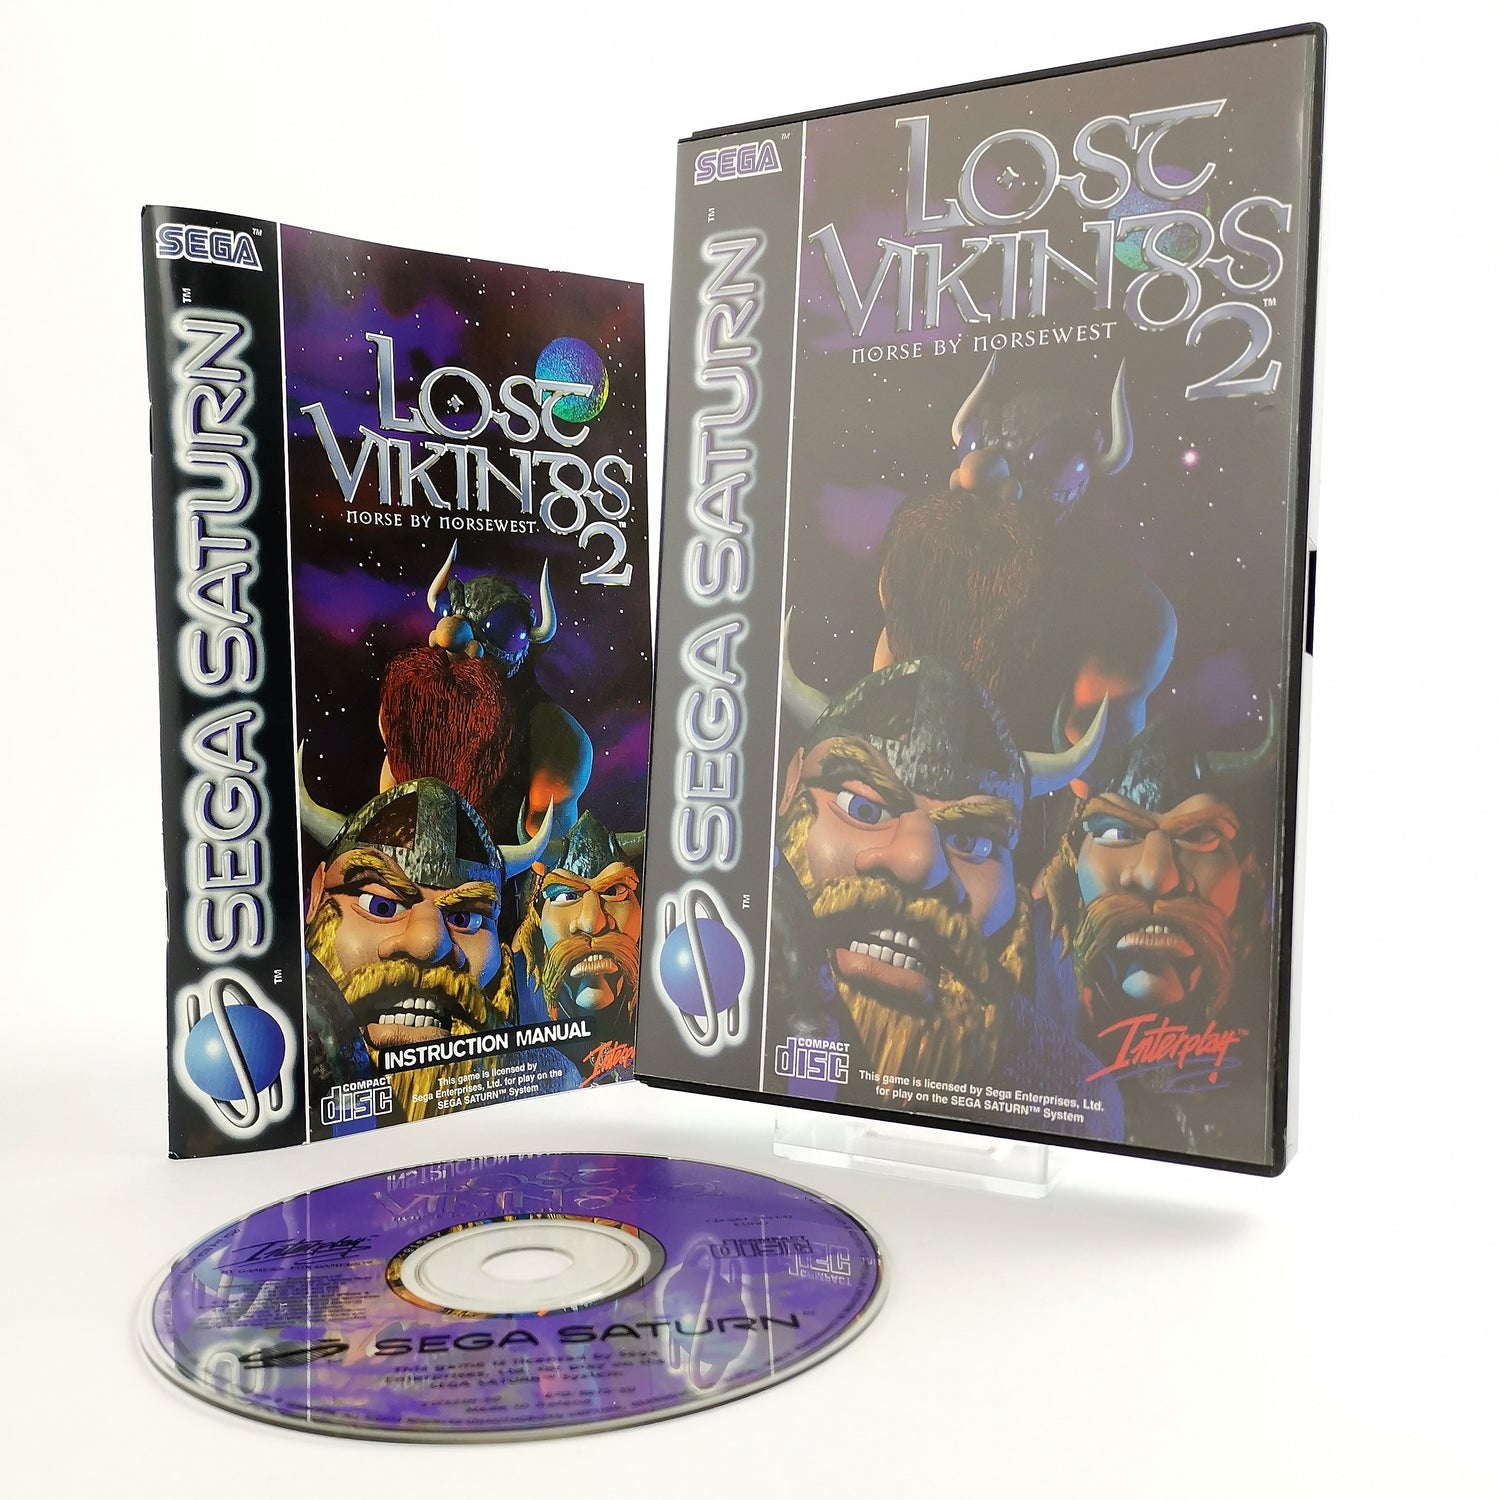 Sega Saturn Game: The Lost Vikings 2 Norse By Norsewest - Original Packaging & Manual PAL